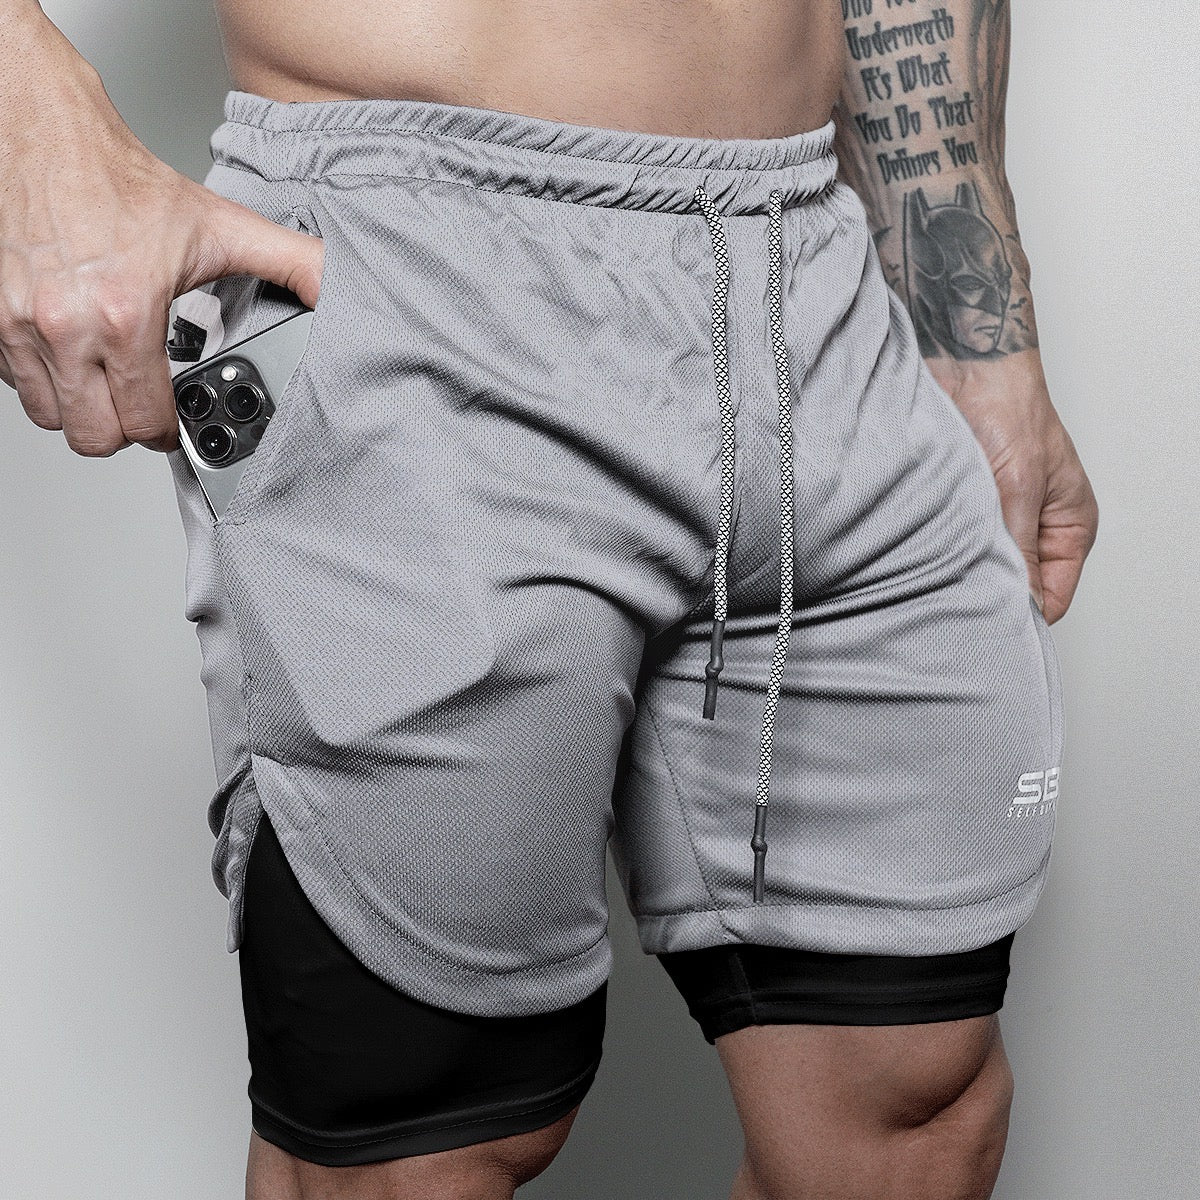 Pursue Fitness Mens Performance Shorts(Grey)